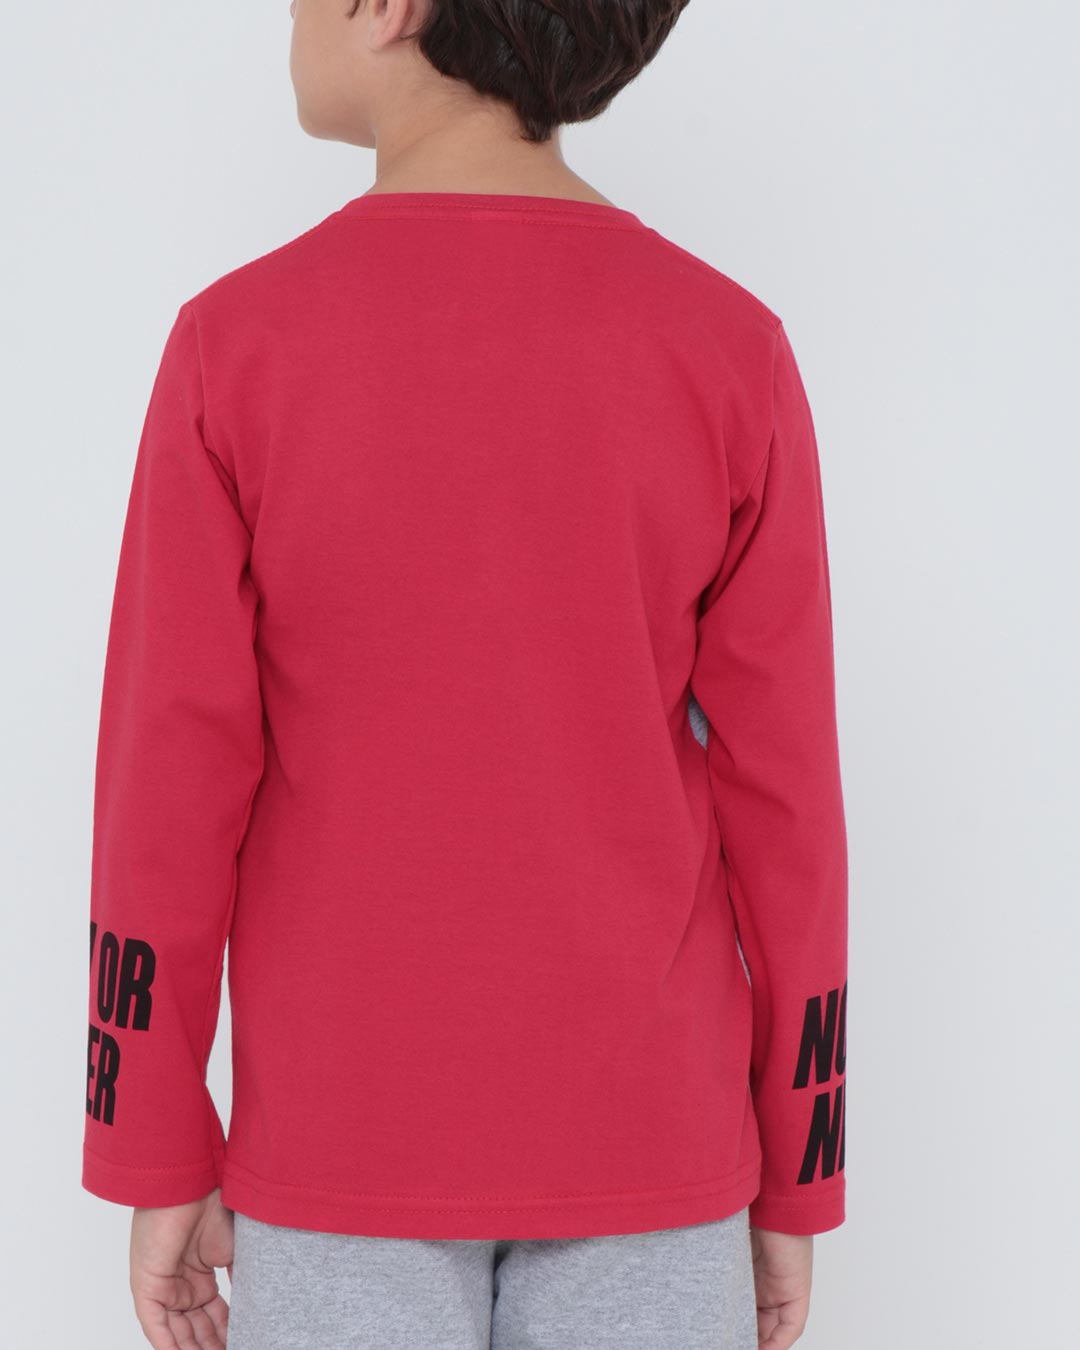 Camiseta-31620-Ml-M410-Street---Vermelho-Medio